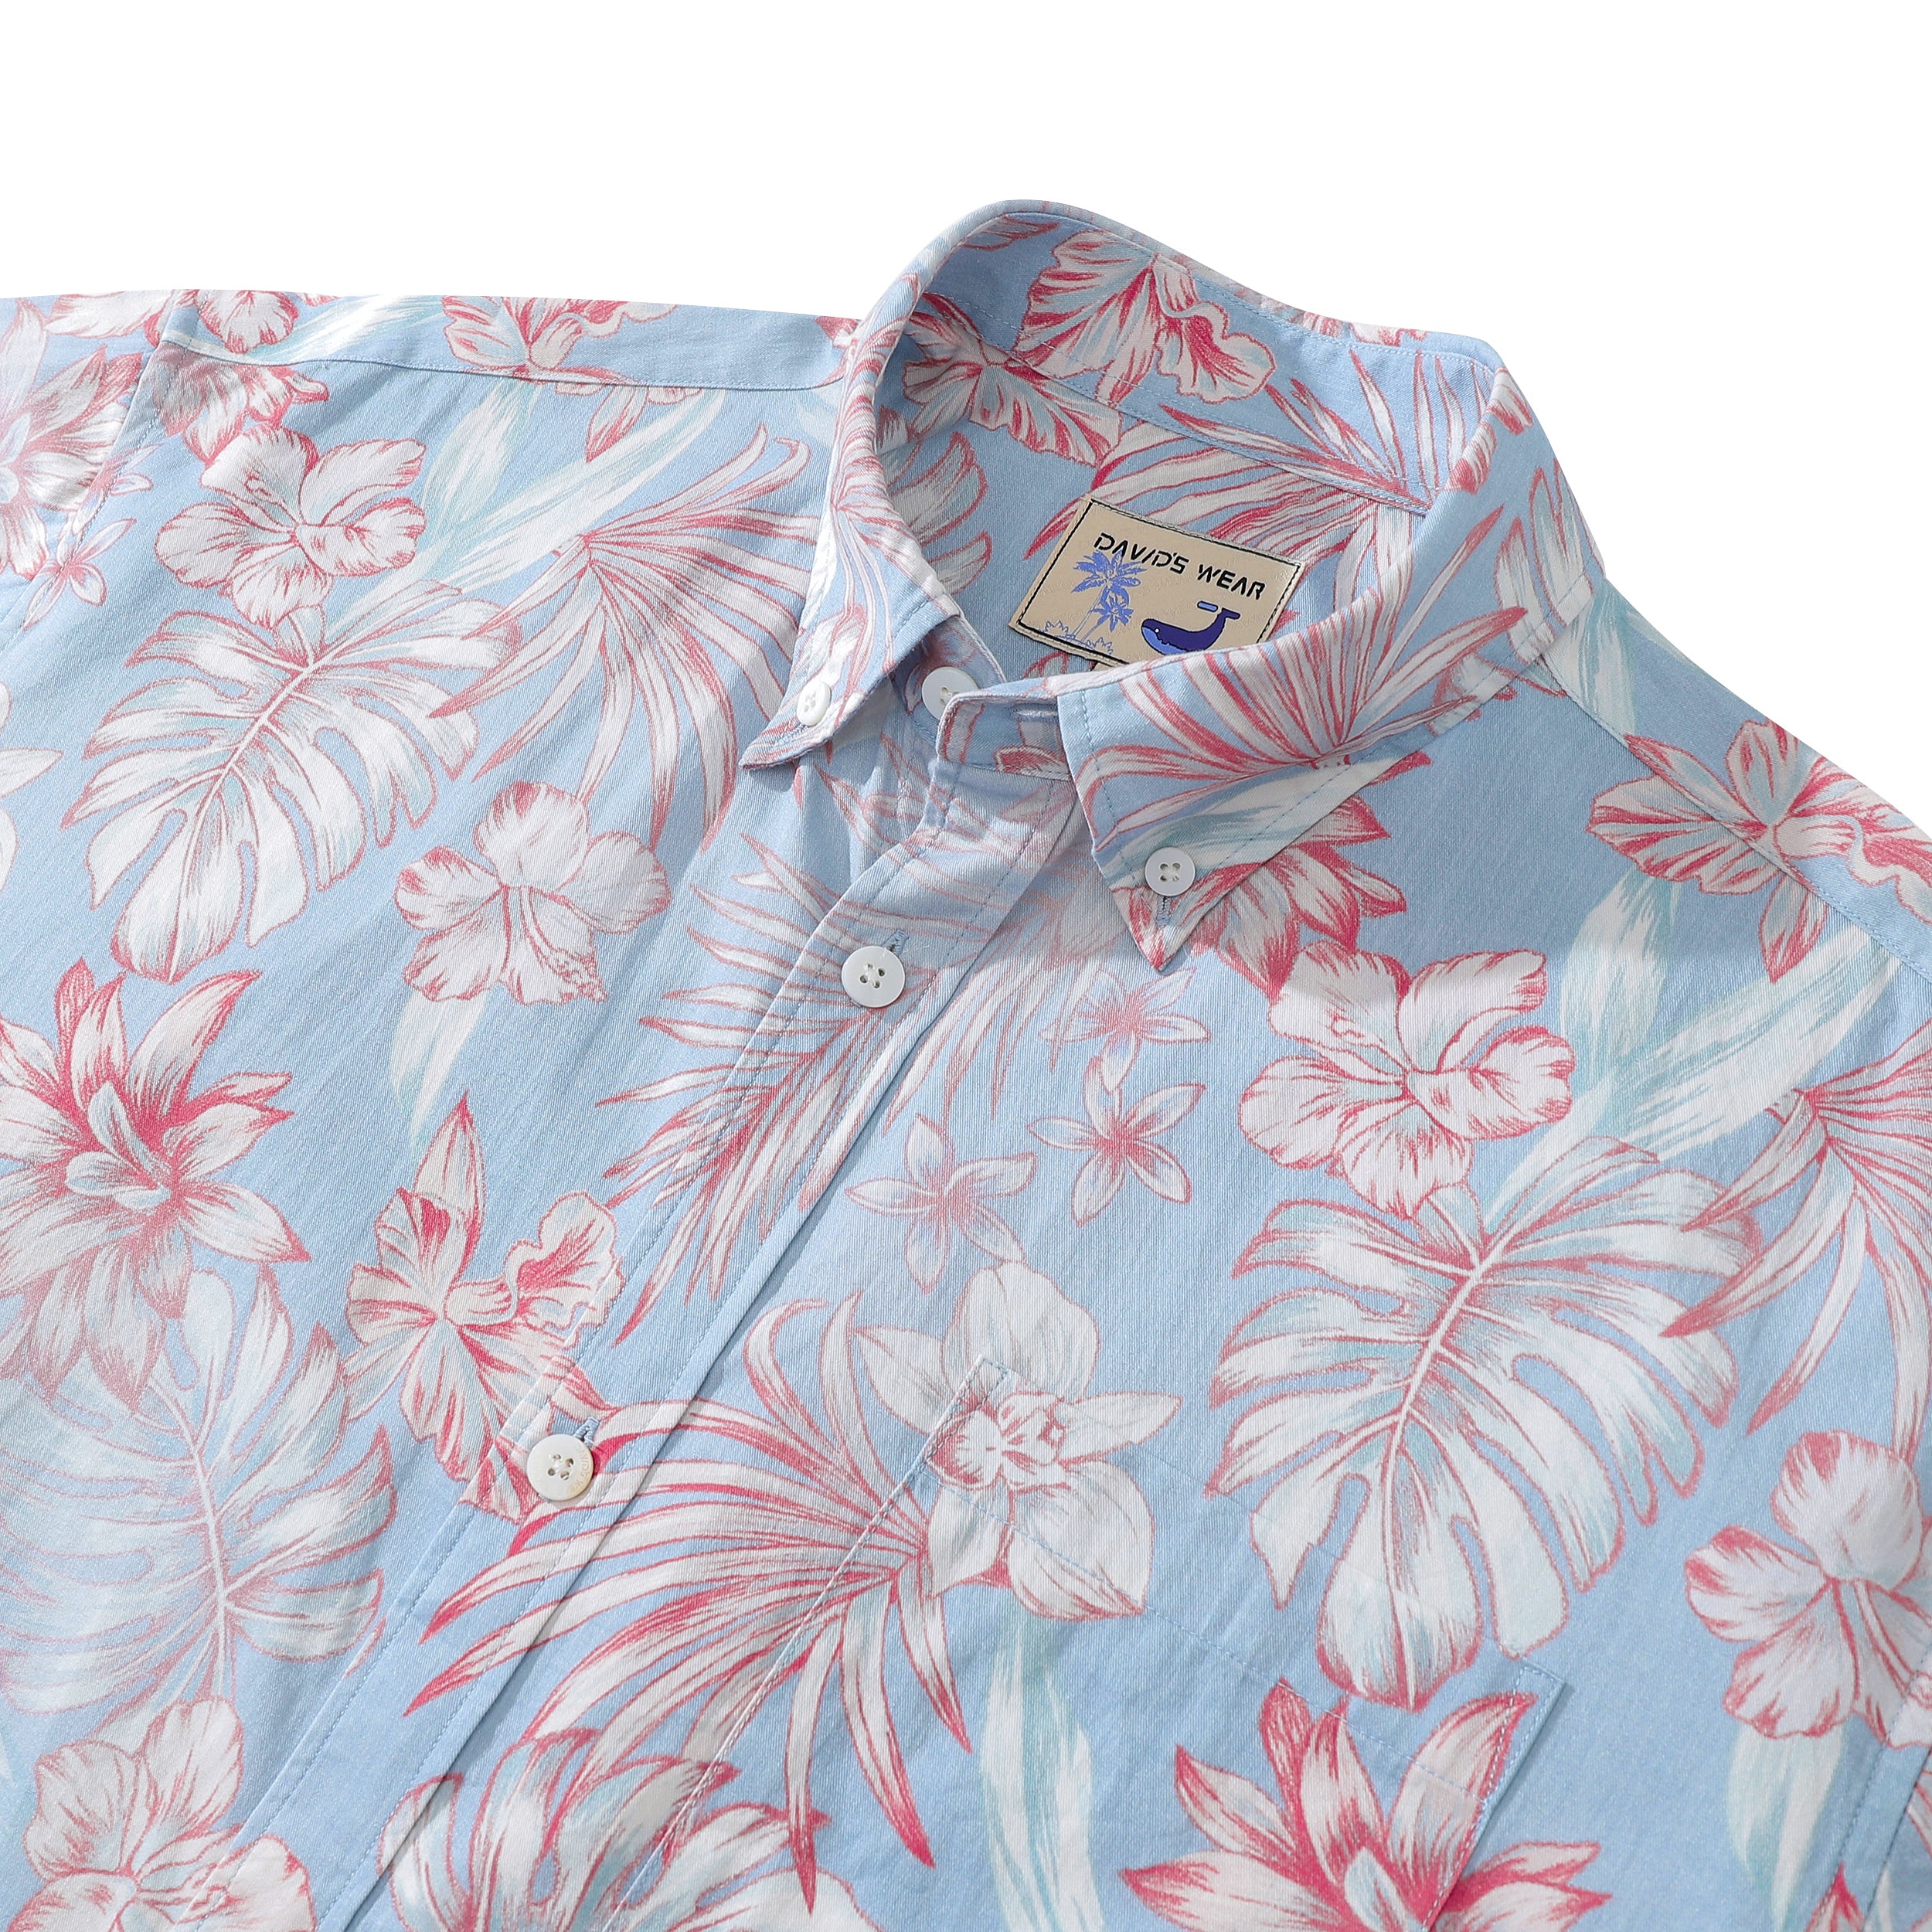 Hawaiian Shirt For Men Purple And Pink Tropical Floral Short-Sleeve Sh ...